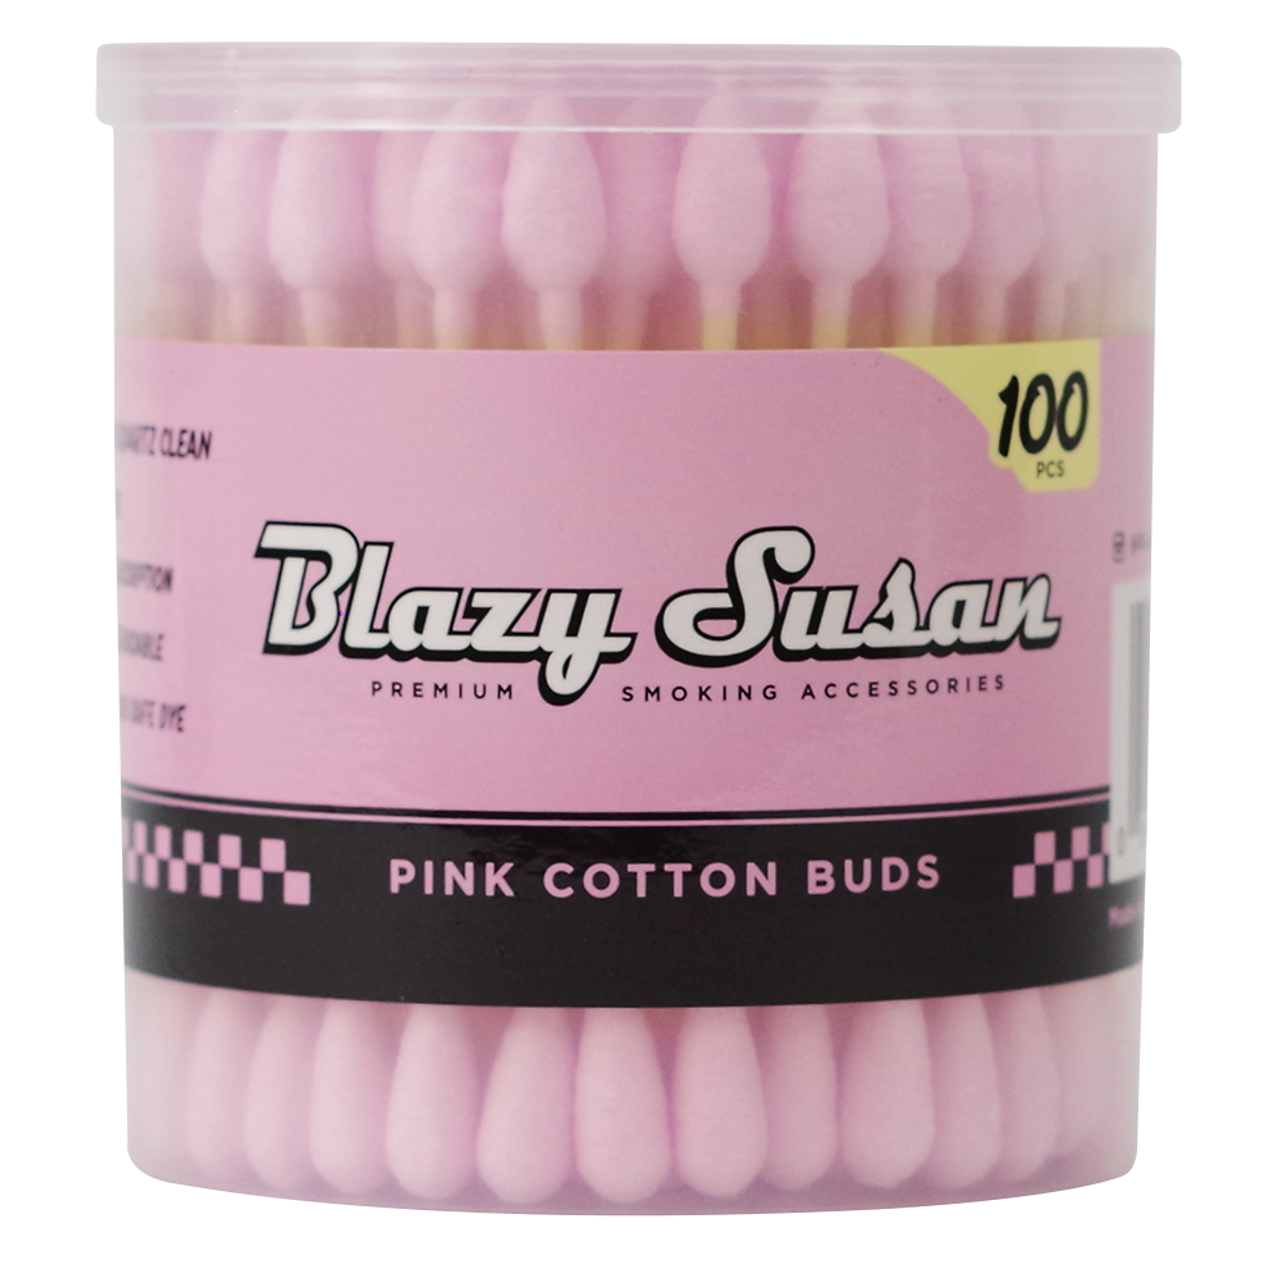 Blazy Susan Pink Cotton Buds Jar 100ct